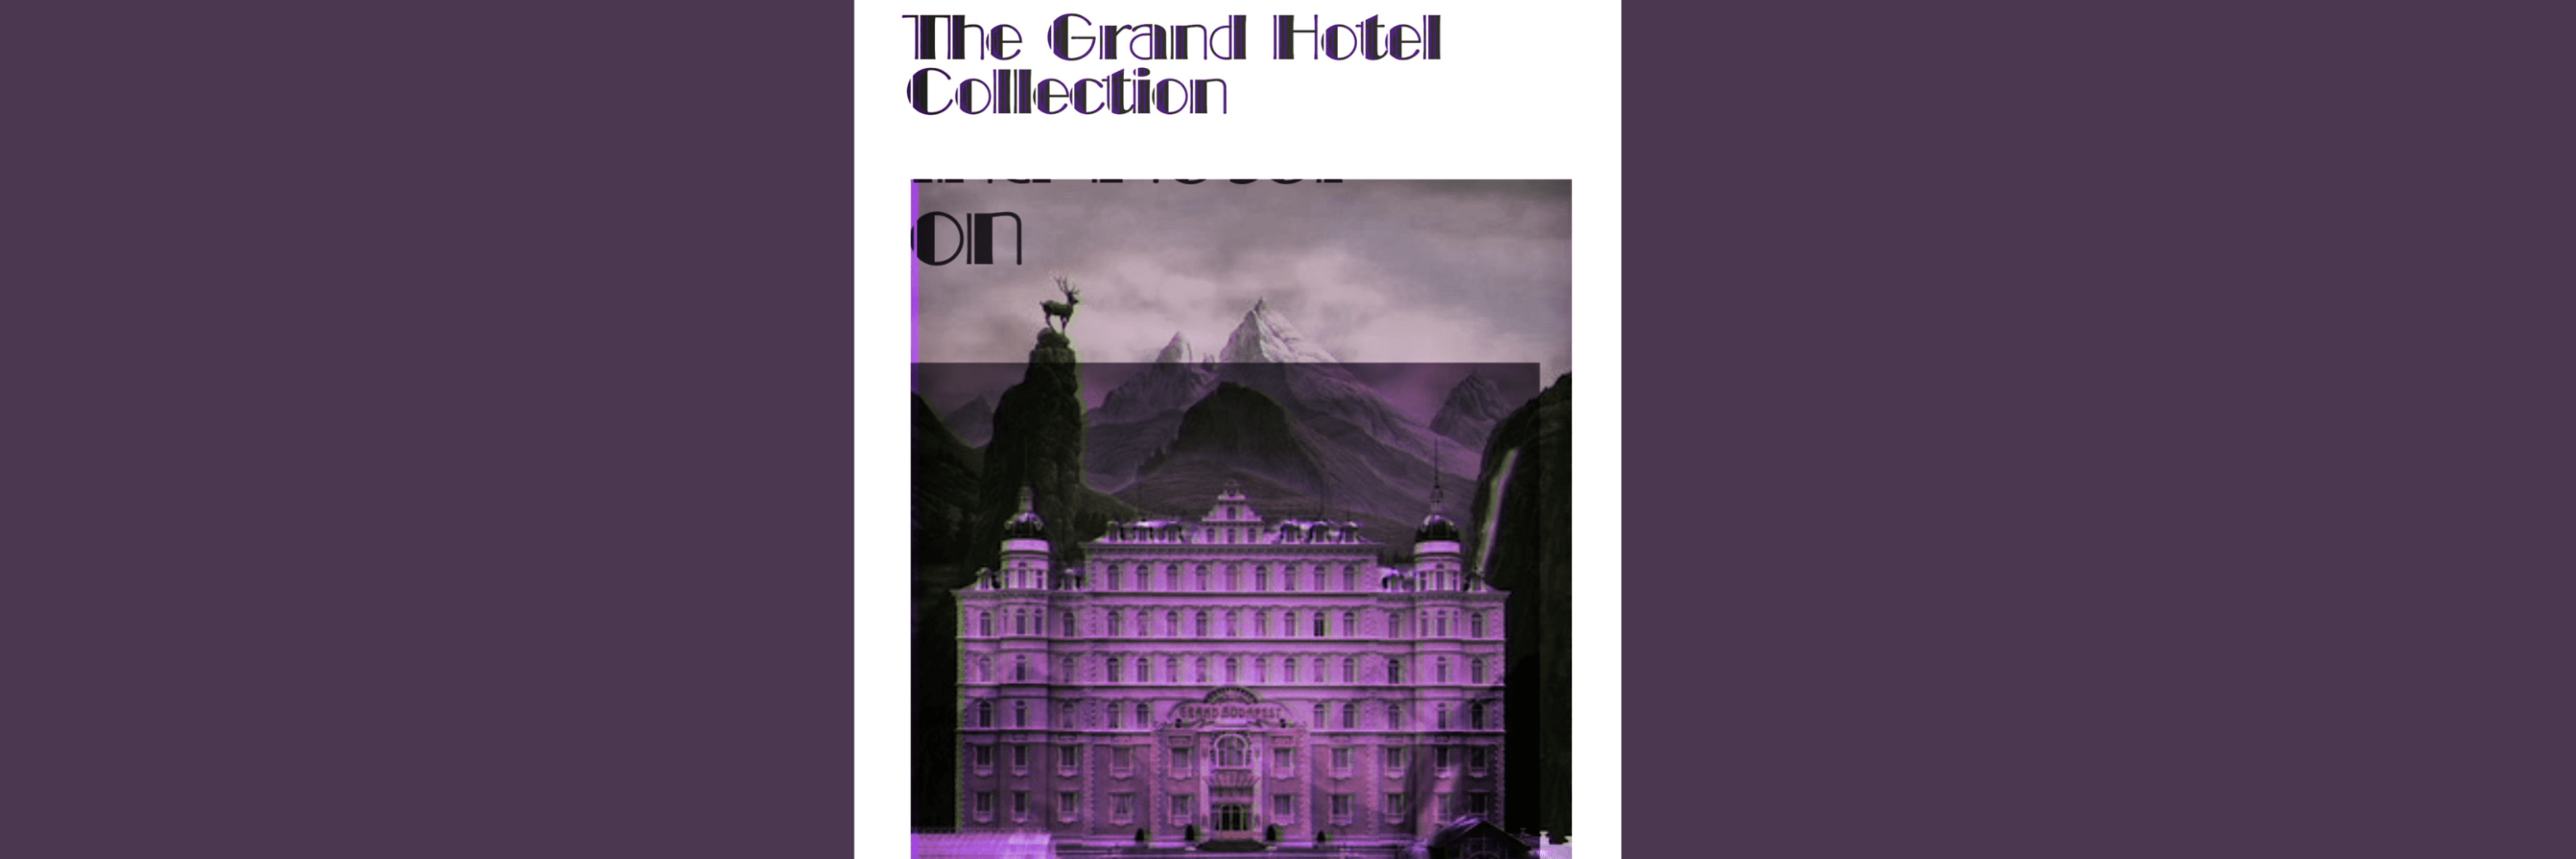 Grande Hotel Collection